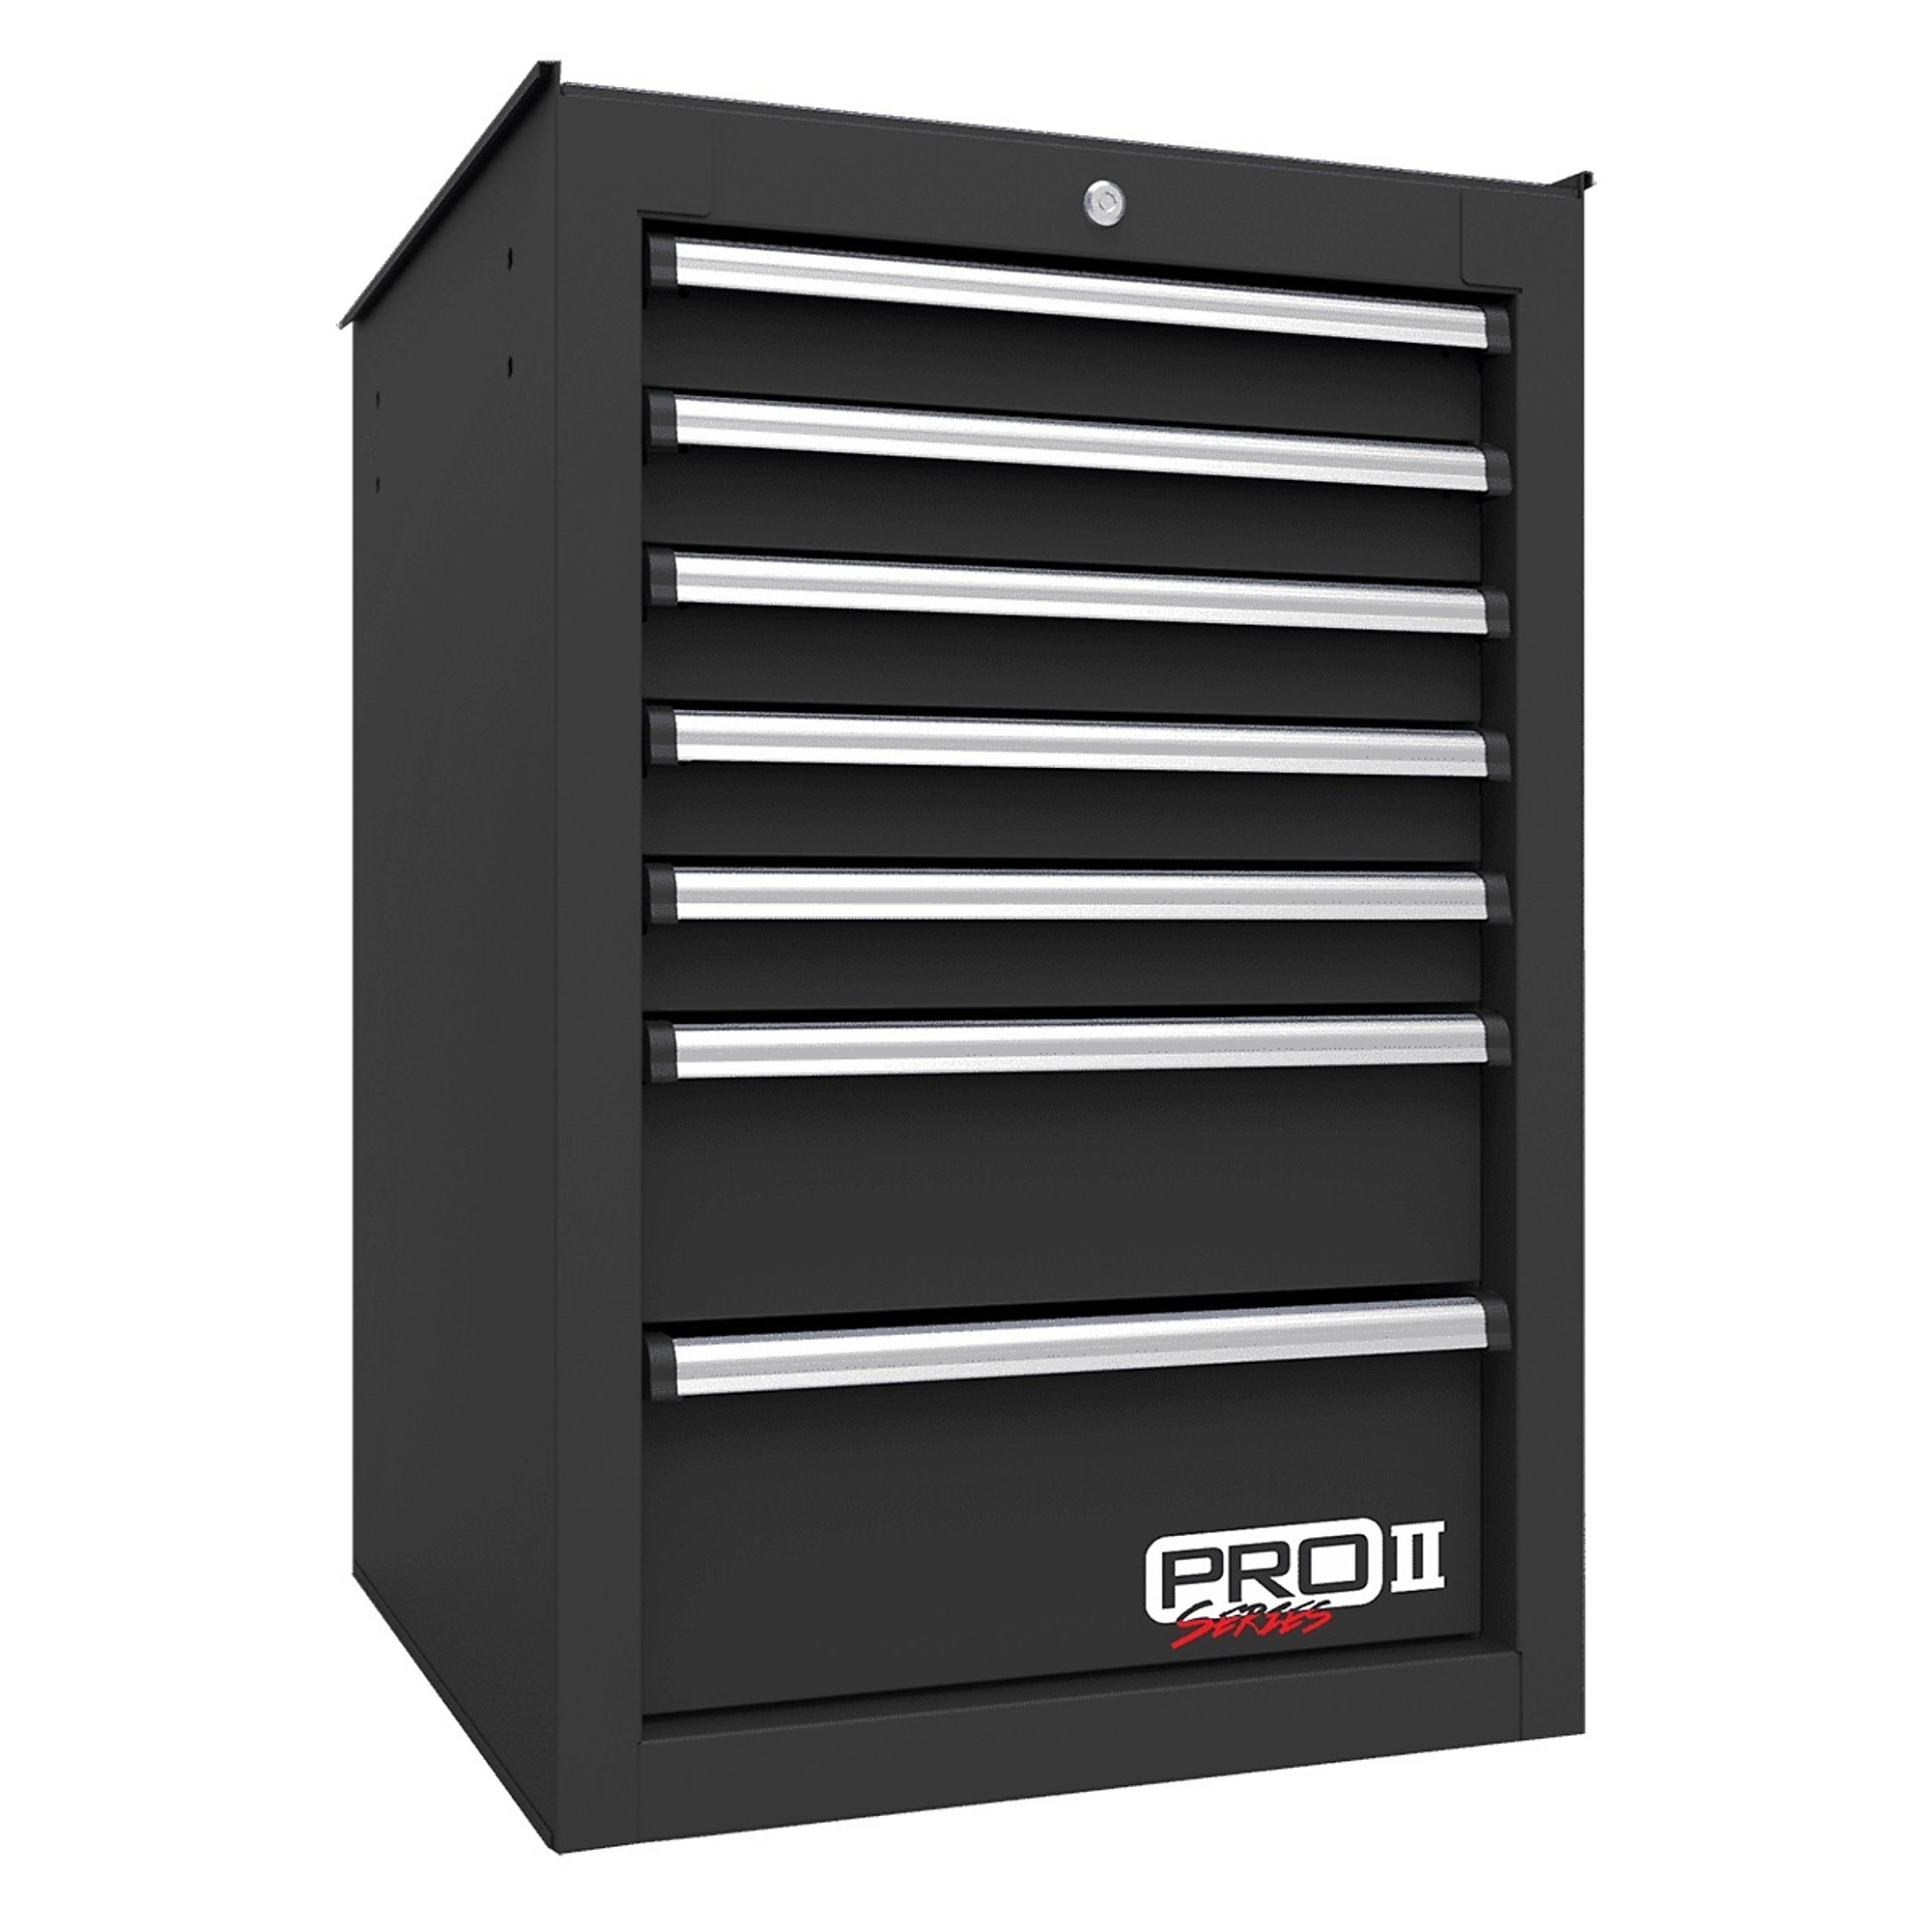 Homak 14Inch Pro 2 Series 7-Drawer Side Tool Cabinet, Black, 14.5Inch W x 24.5Inch D x 32.87Inch H., Model BK08014552